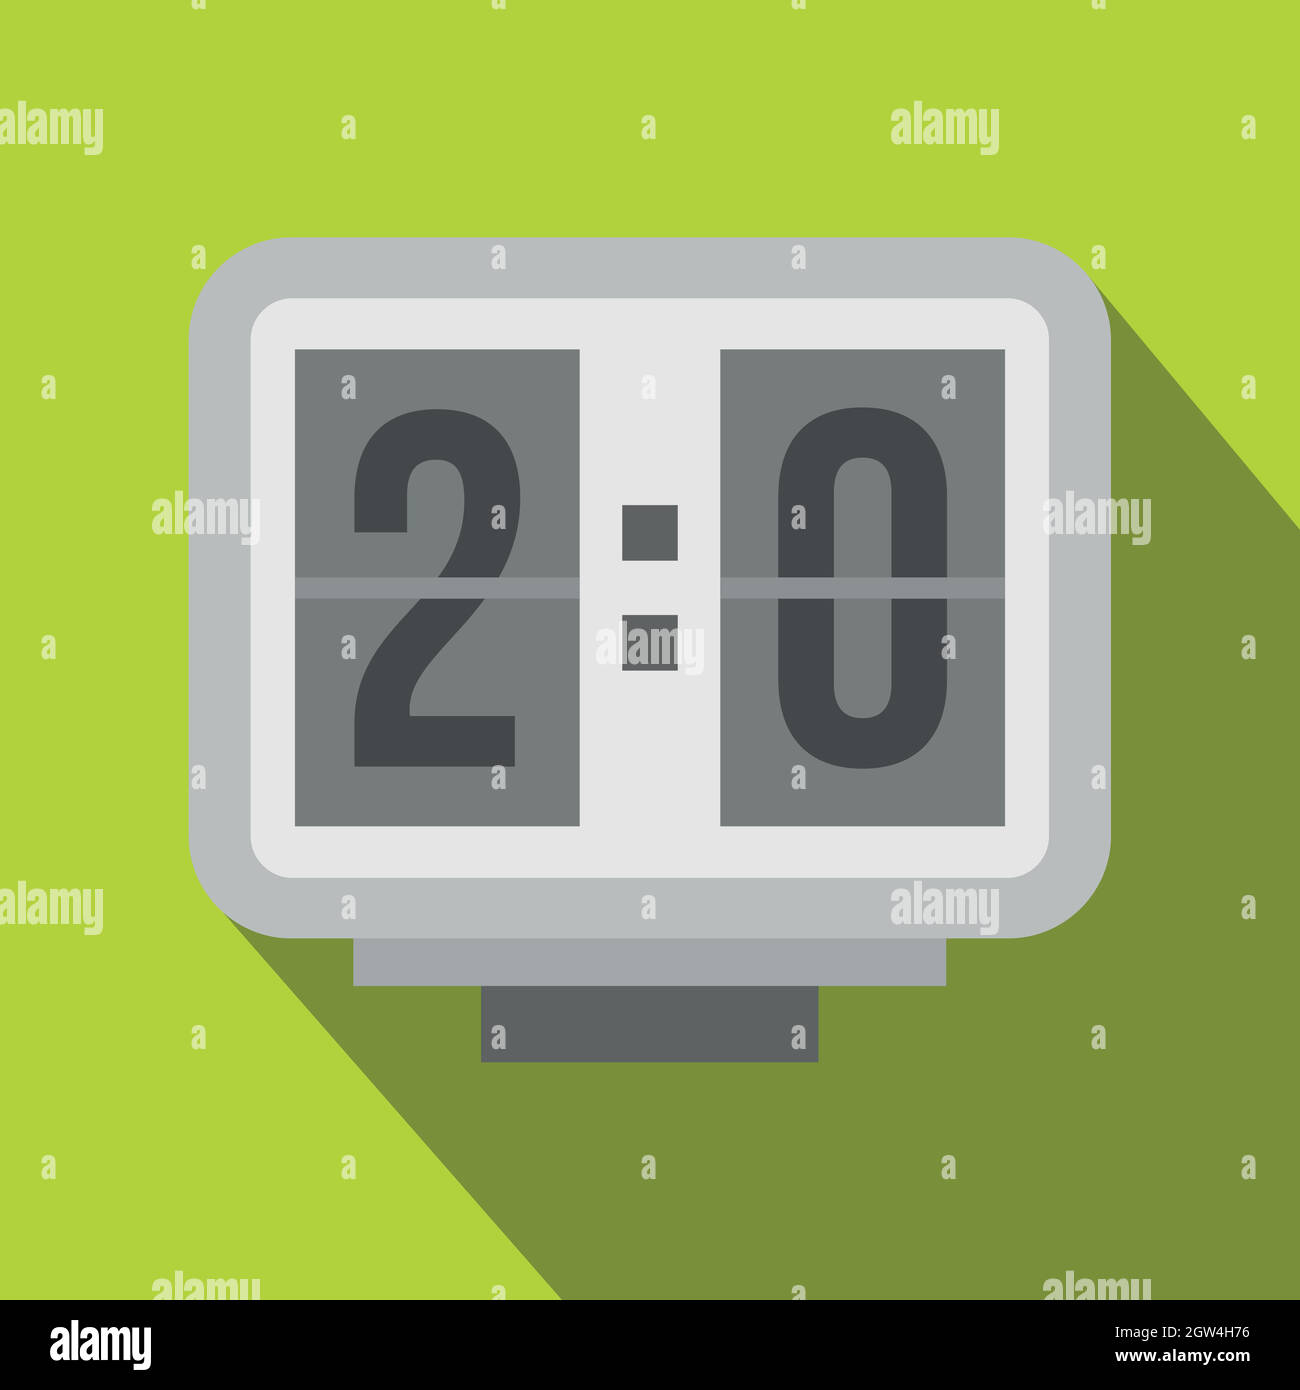 Electronic soccer scoreboard icon, flat style Stock Vector